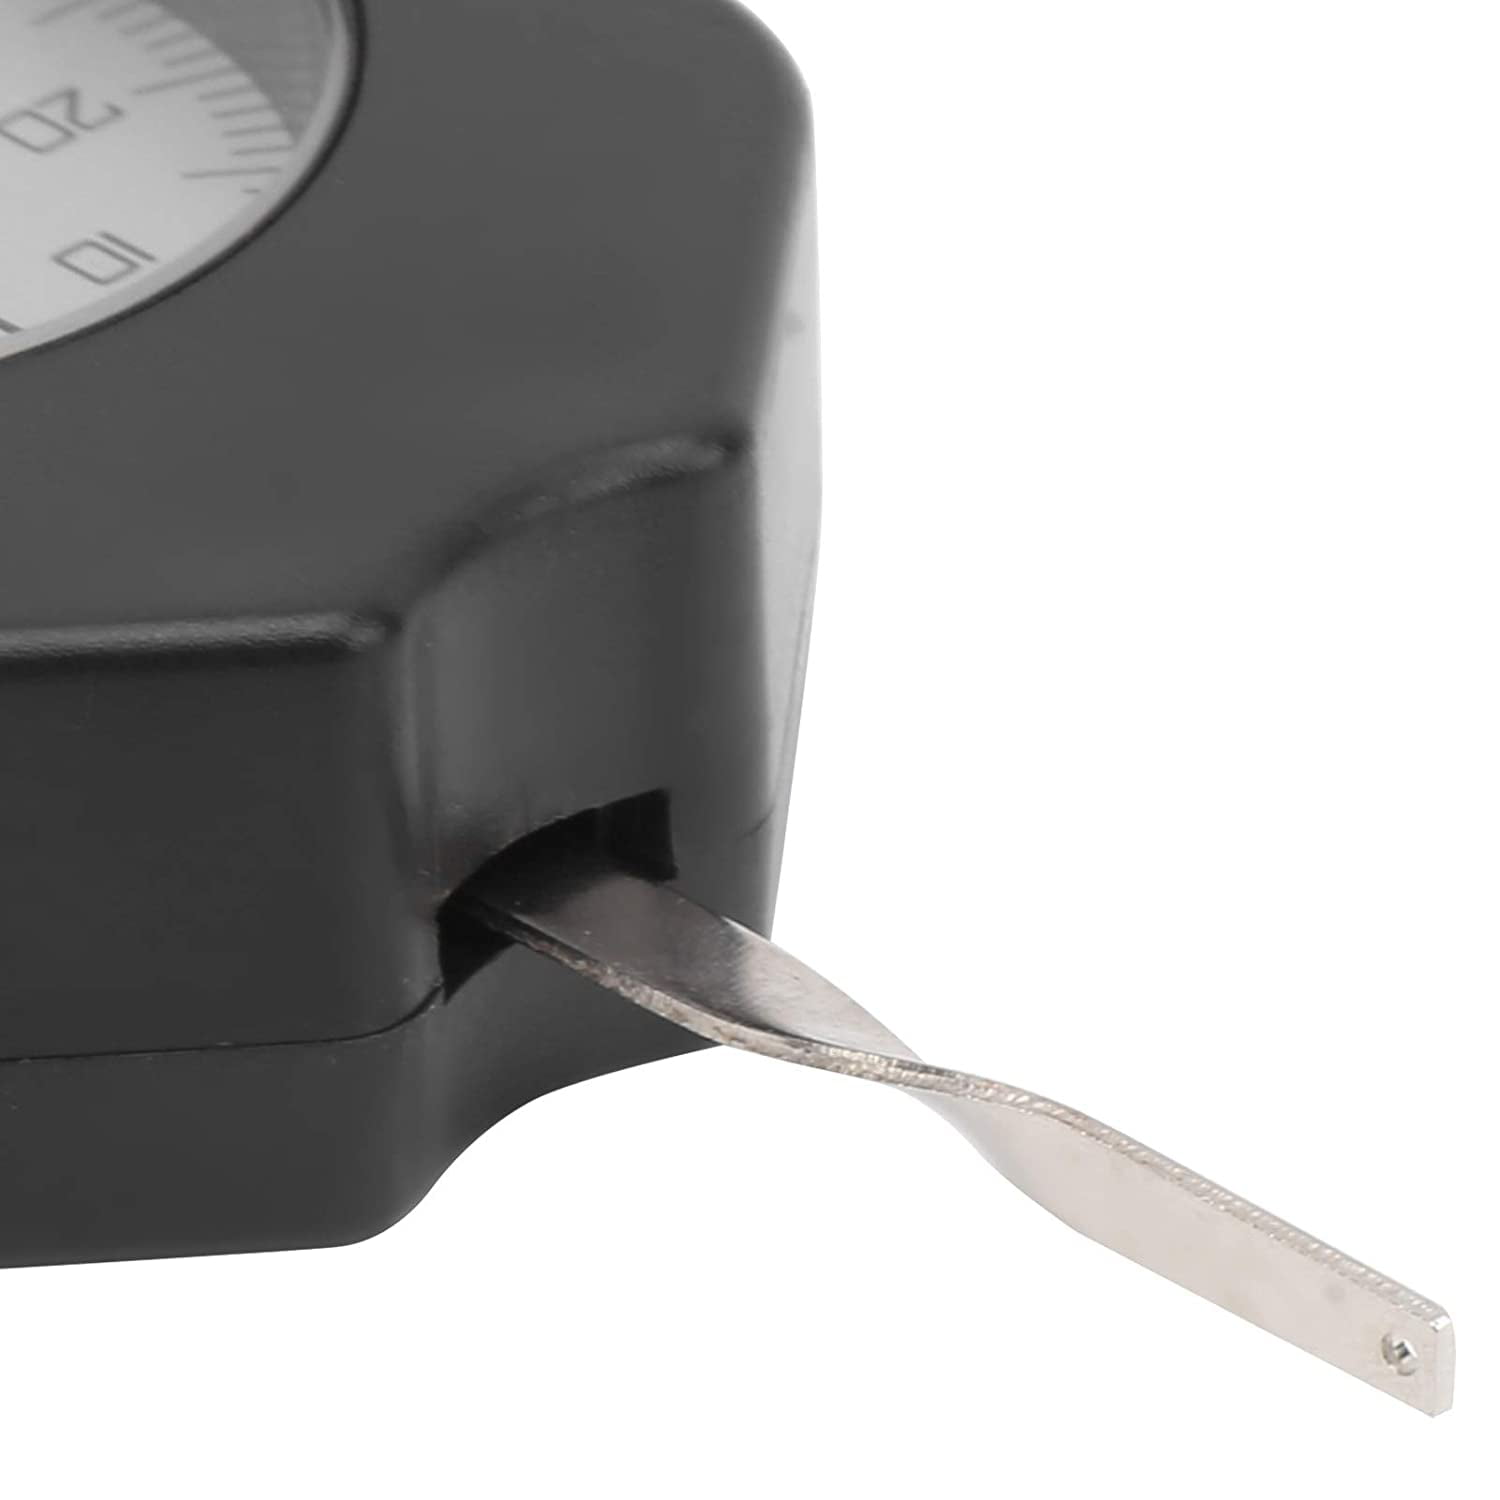 SEG‑50‑1 Dial Tensiometer Portable Single Needle Switch Force Gauge for Measuring 50g Tension Meter 